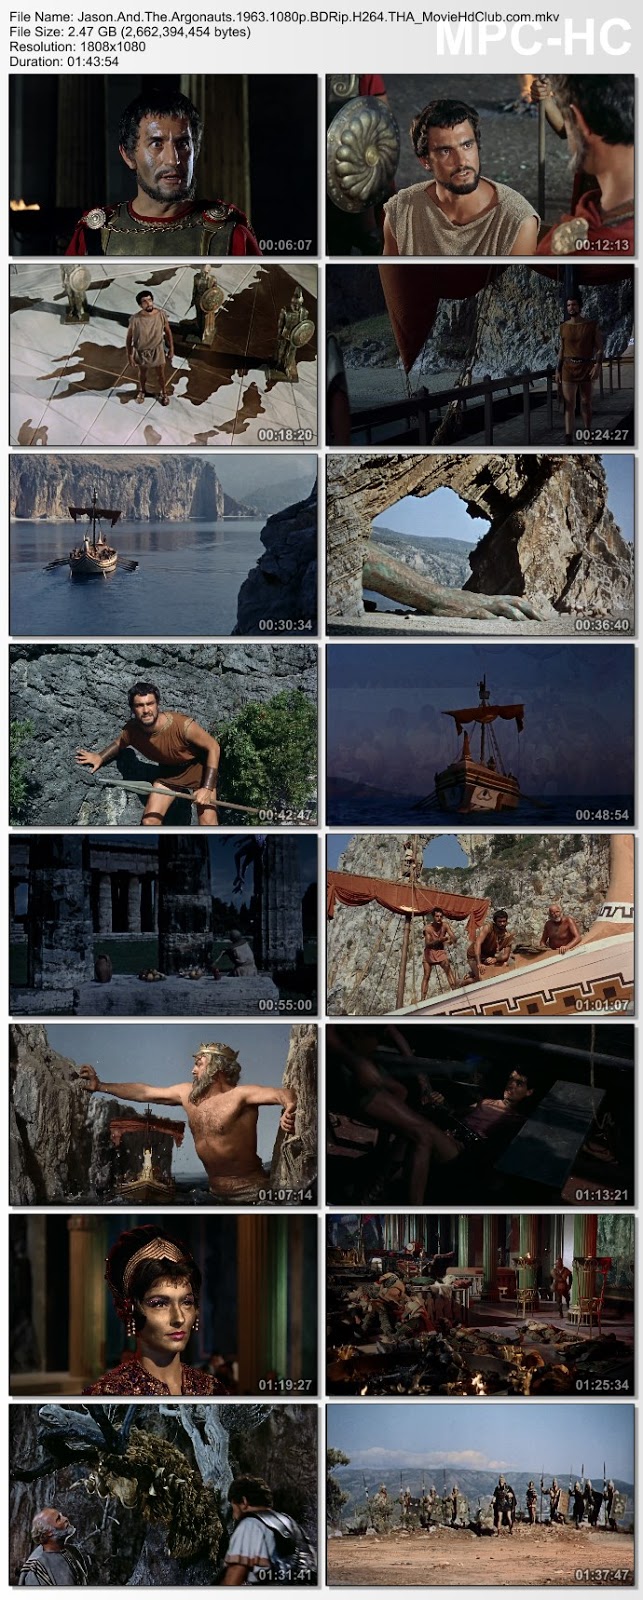 [Mini-HD] Jason And The Argonauts (1963) - อภินิหารขนแกะทองคำ [1080p][เสียง:ไทย 2.0/Eng 2.0][ซับ:ไทย/Eng][.MKV][2.48GB] JA_MovieHdClub_SS